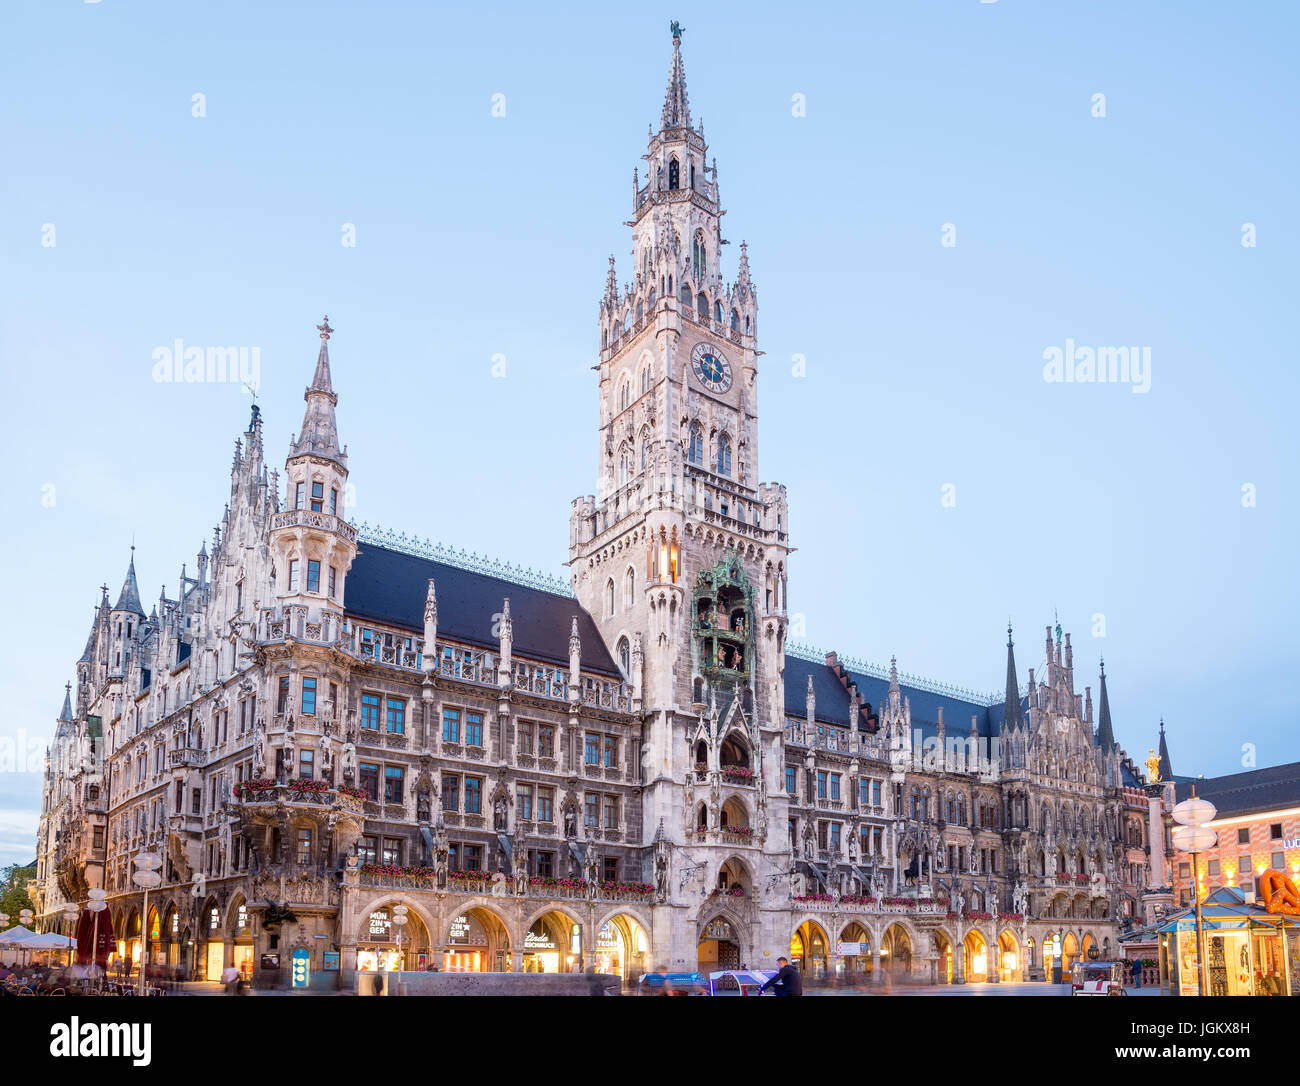 Munich, Germany - June 6, 2016: Munich Town Hall - Neue Rathaus on Marienplatz at night Stock Photo